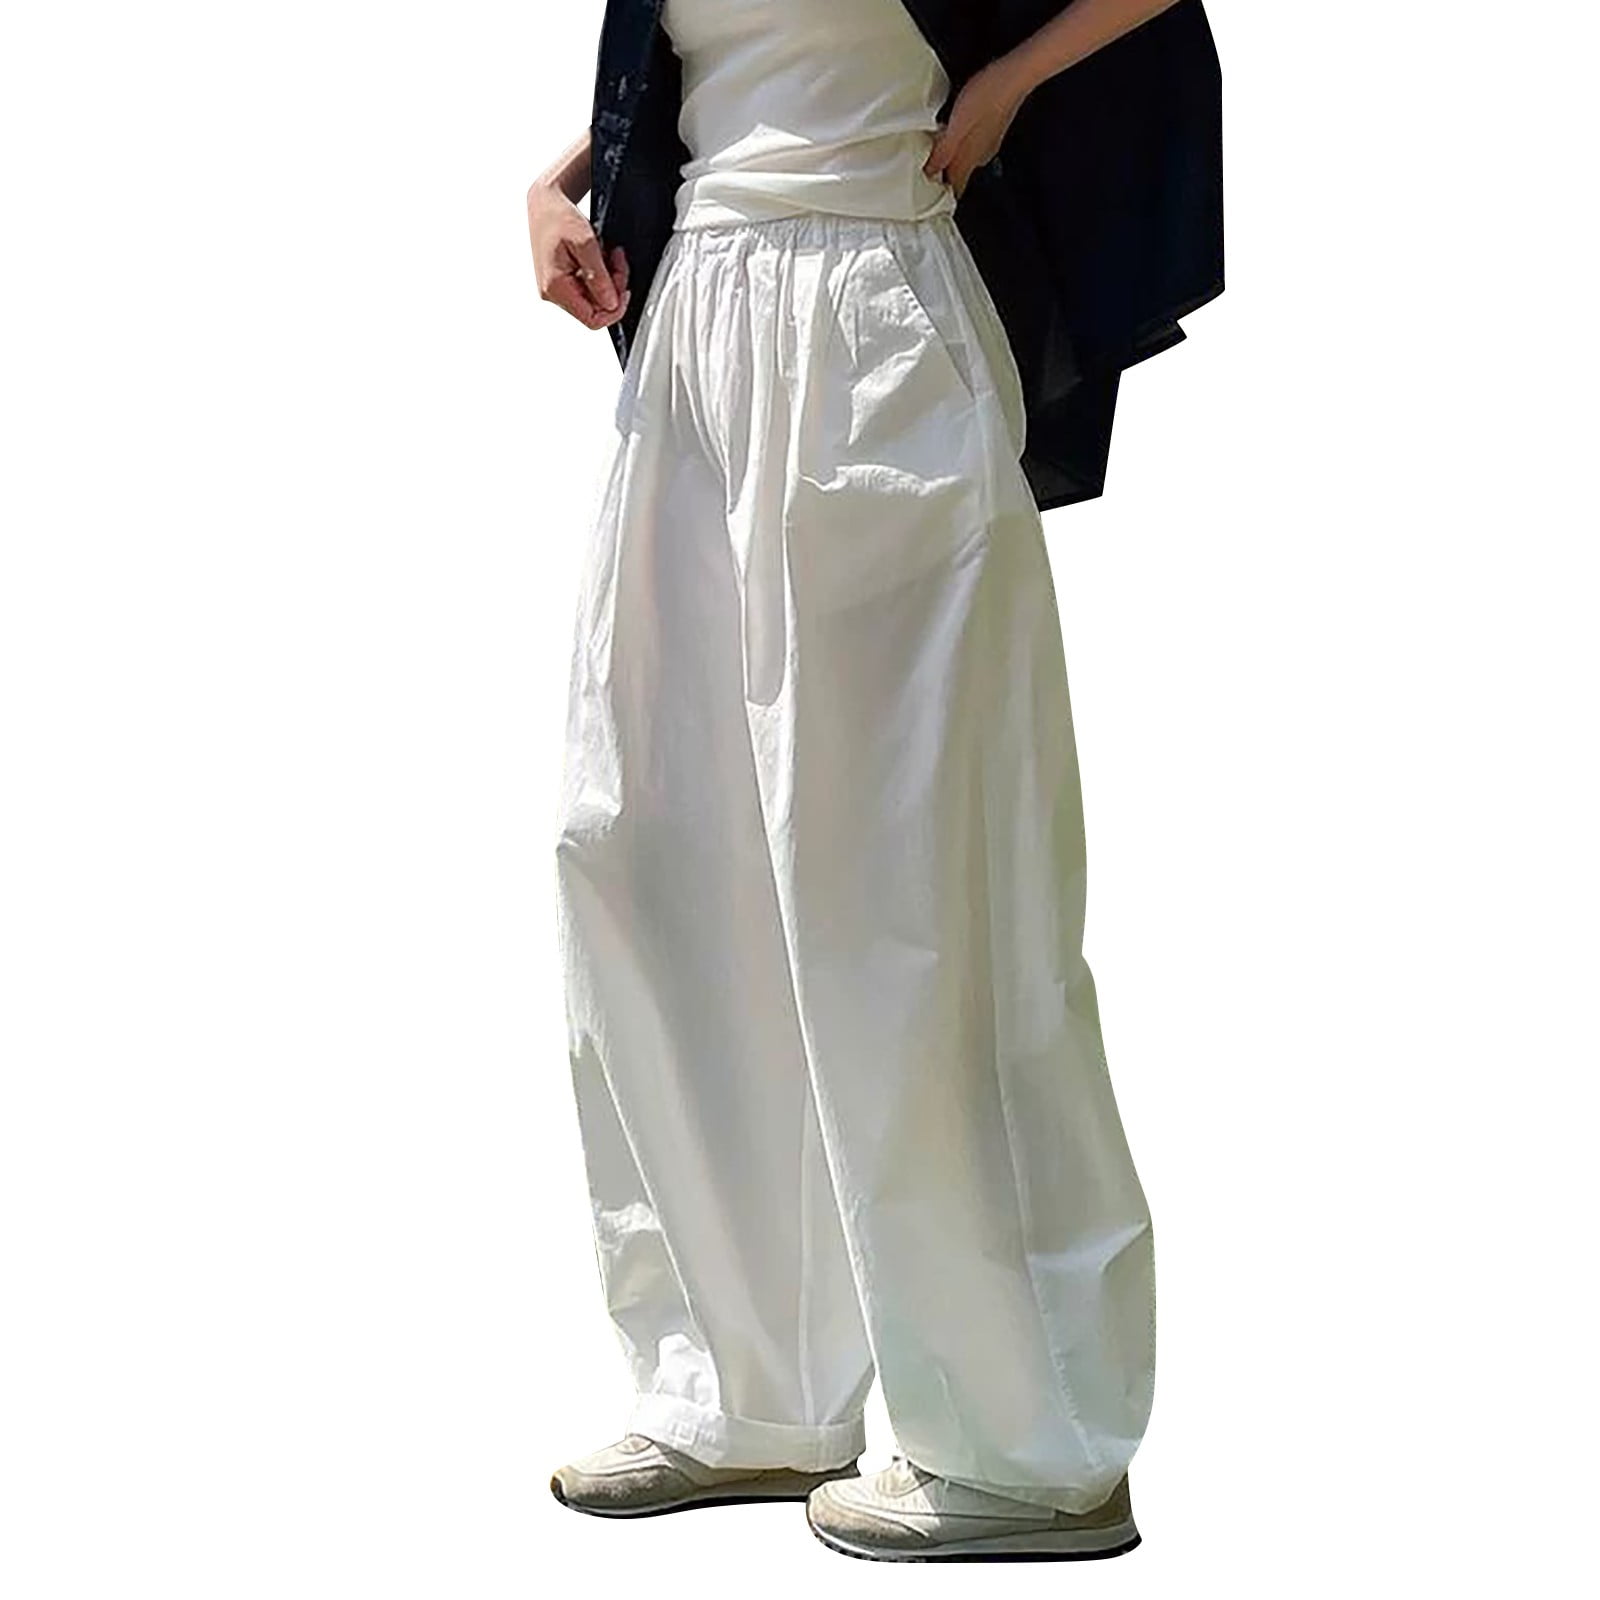 PMUYBHF Yoga Pants with Pockets Tall Women 34-36 Inseam Christmas